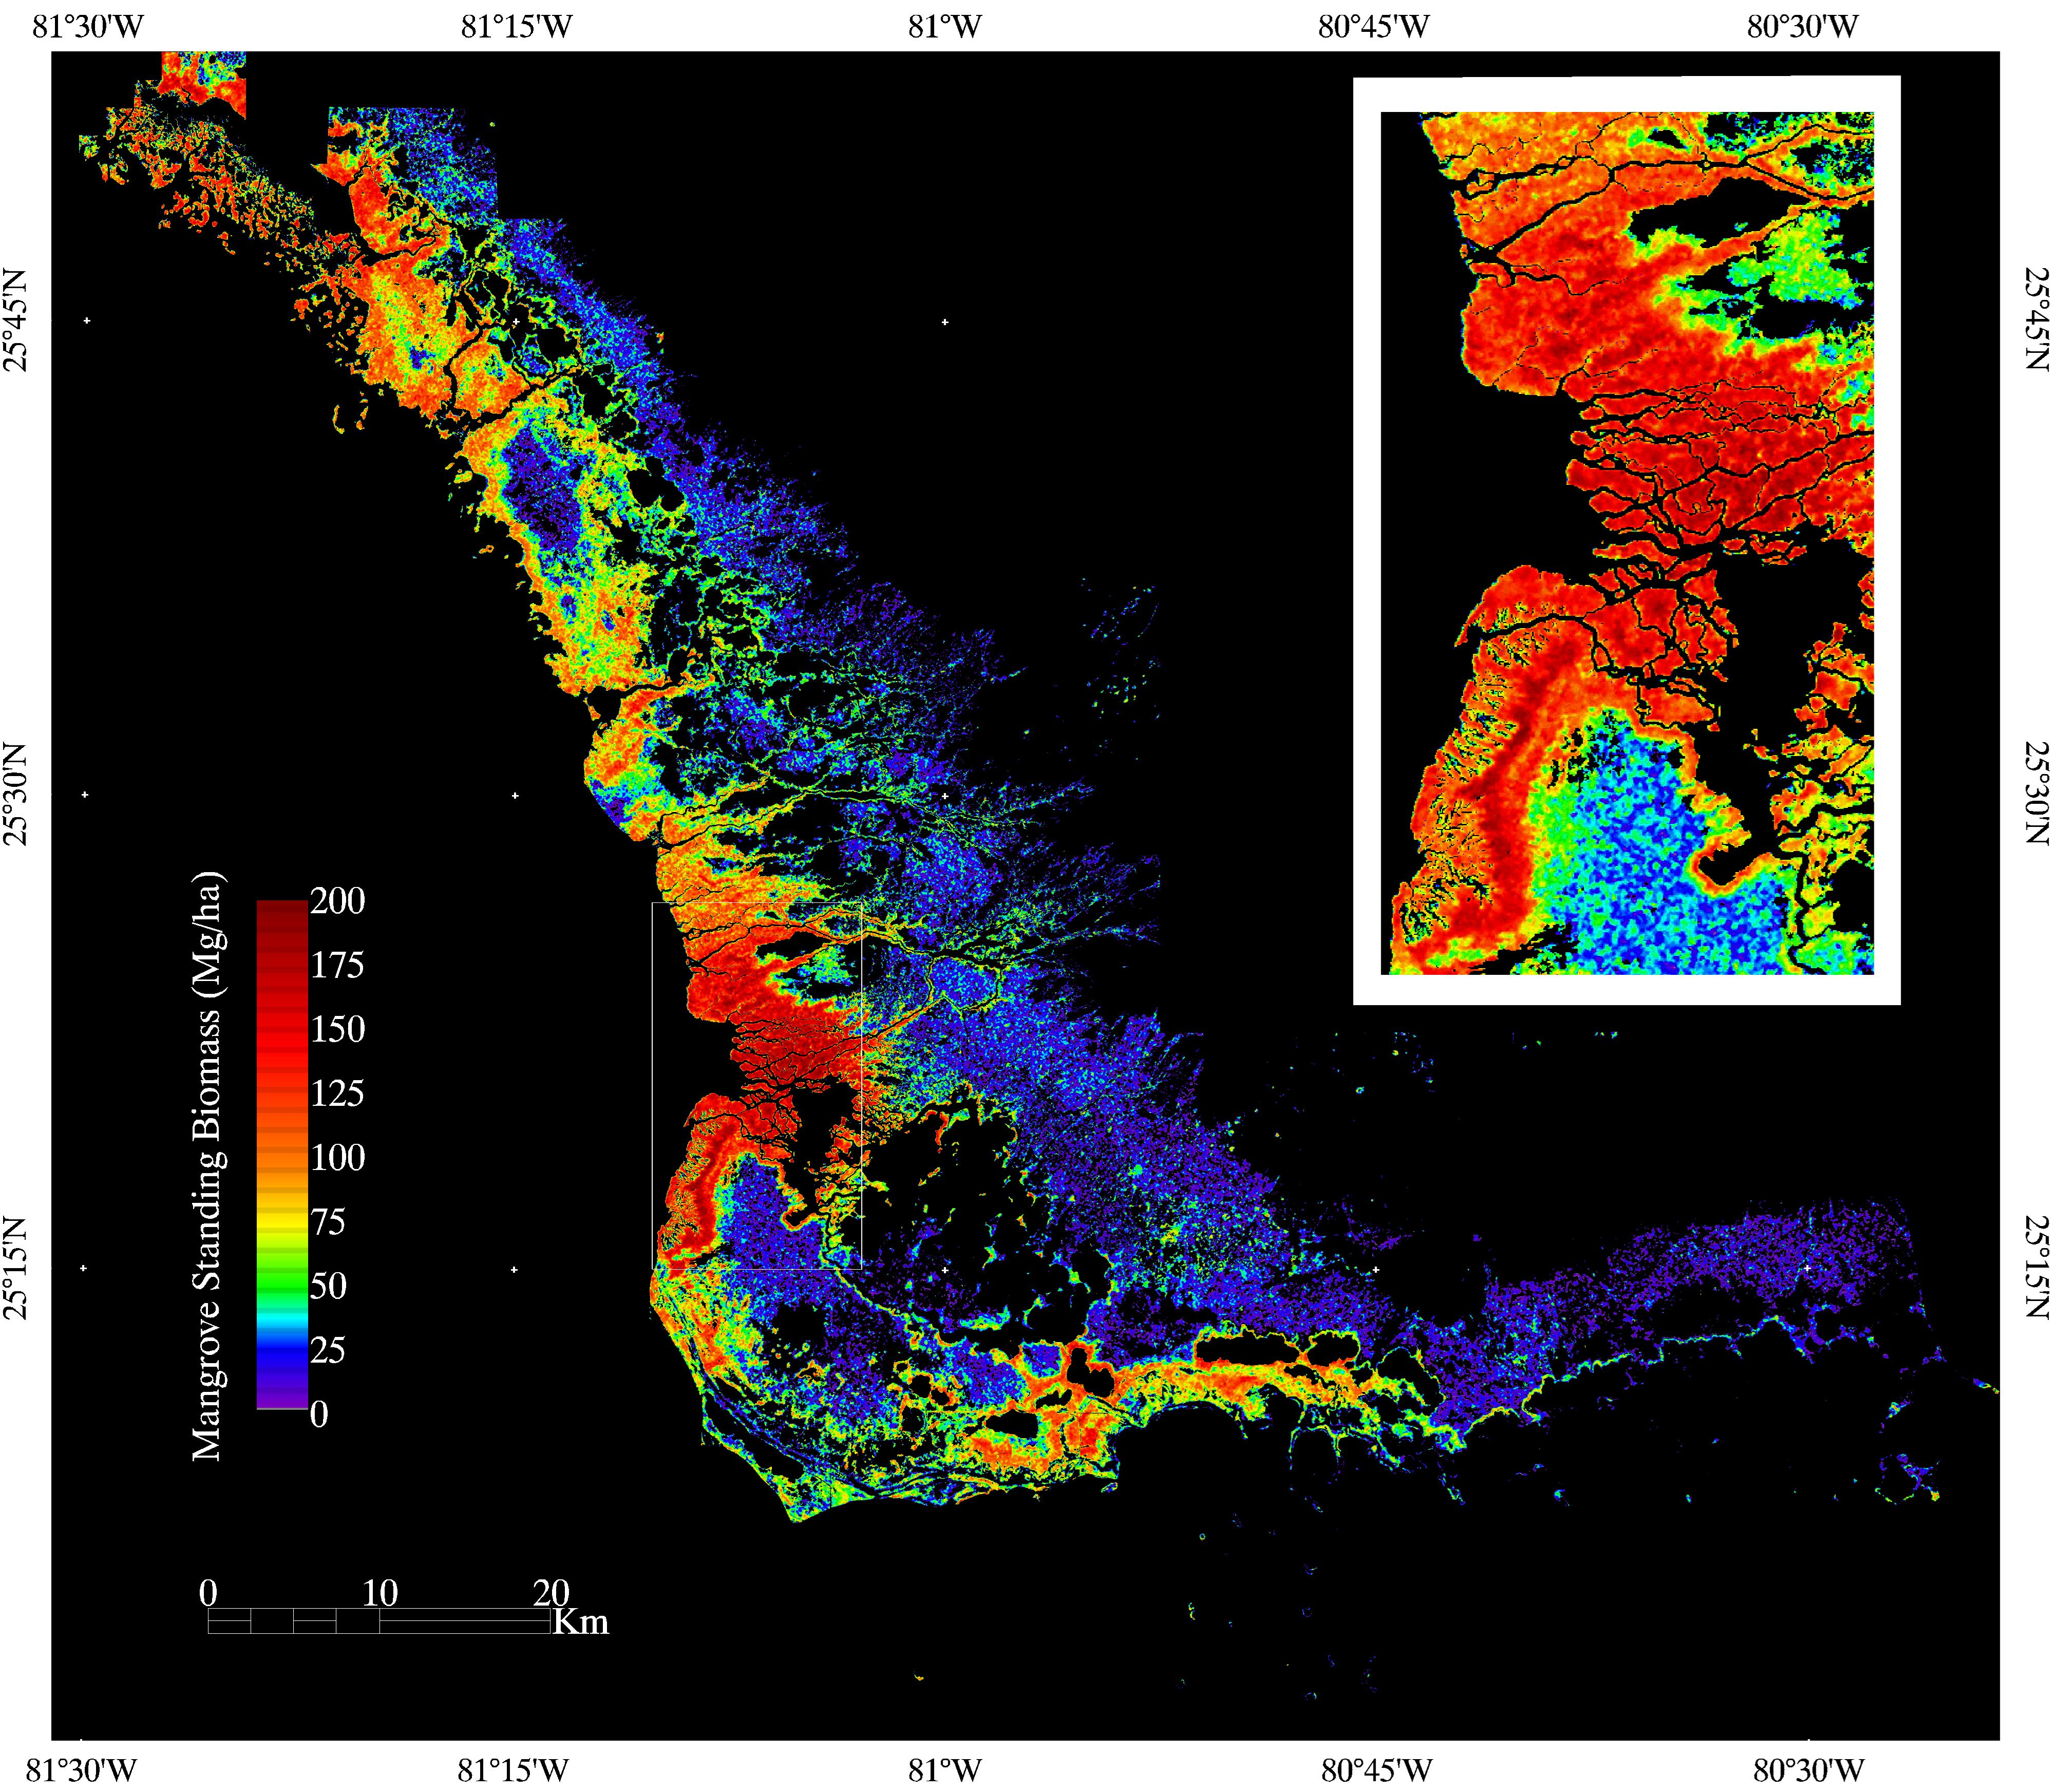 Florida Coastal Everglades Lter - Gis Data And Maps - Florida Parcel Maps